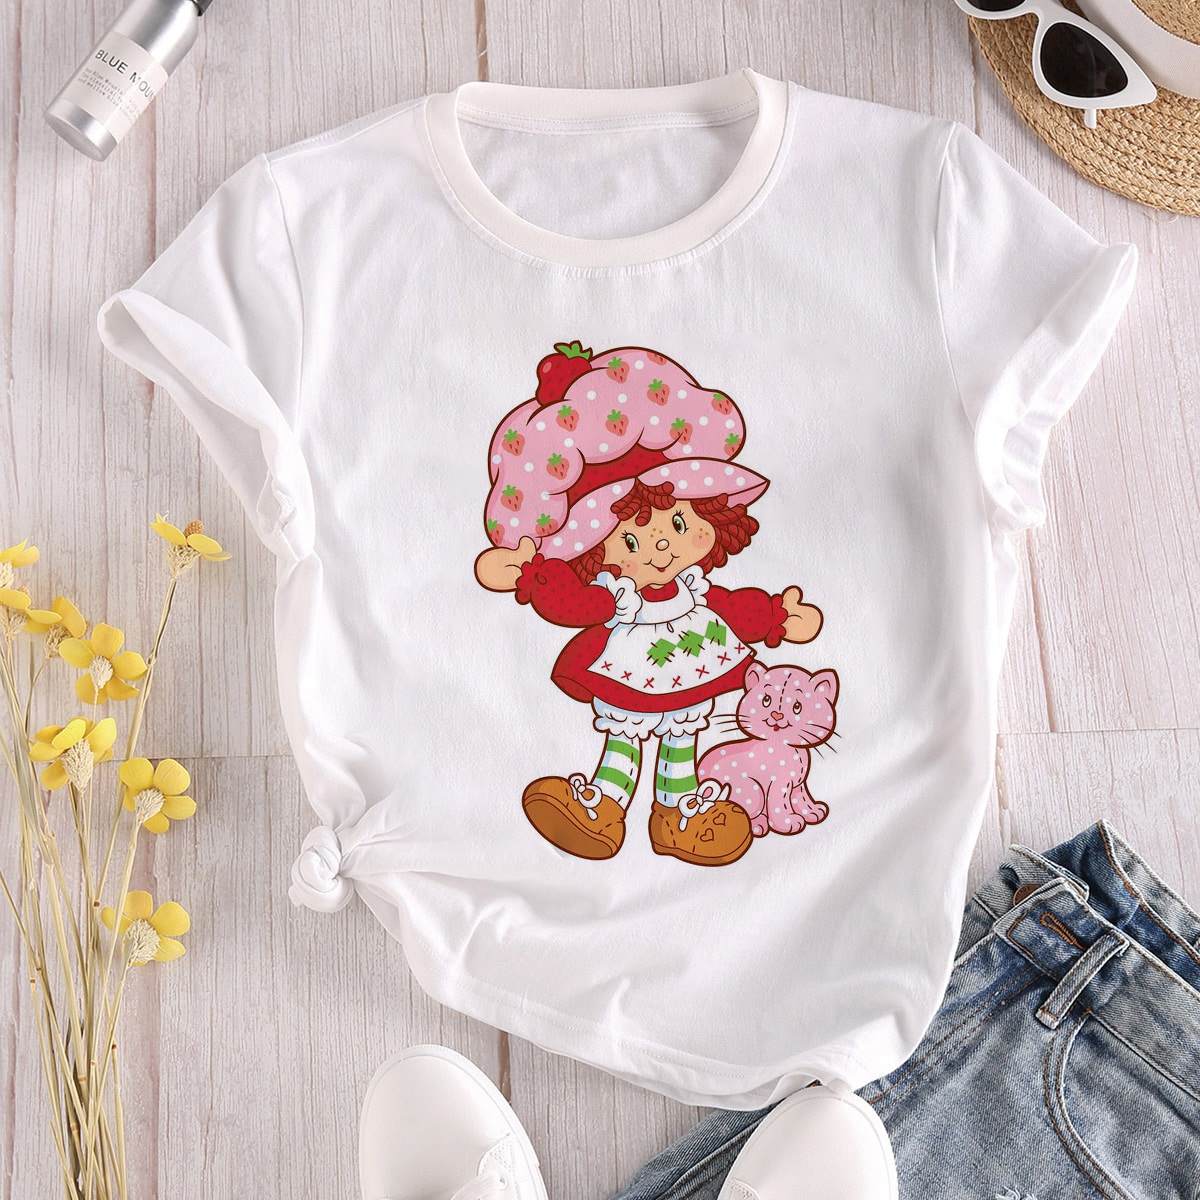 Vintage Strawberry Shortcake Shirt, Cartoon Friends Nostalgia Shirt, 80s Cartoon Friends Shirt, Care Bears And Strawberry TeeLemon Meringue, Apricot